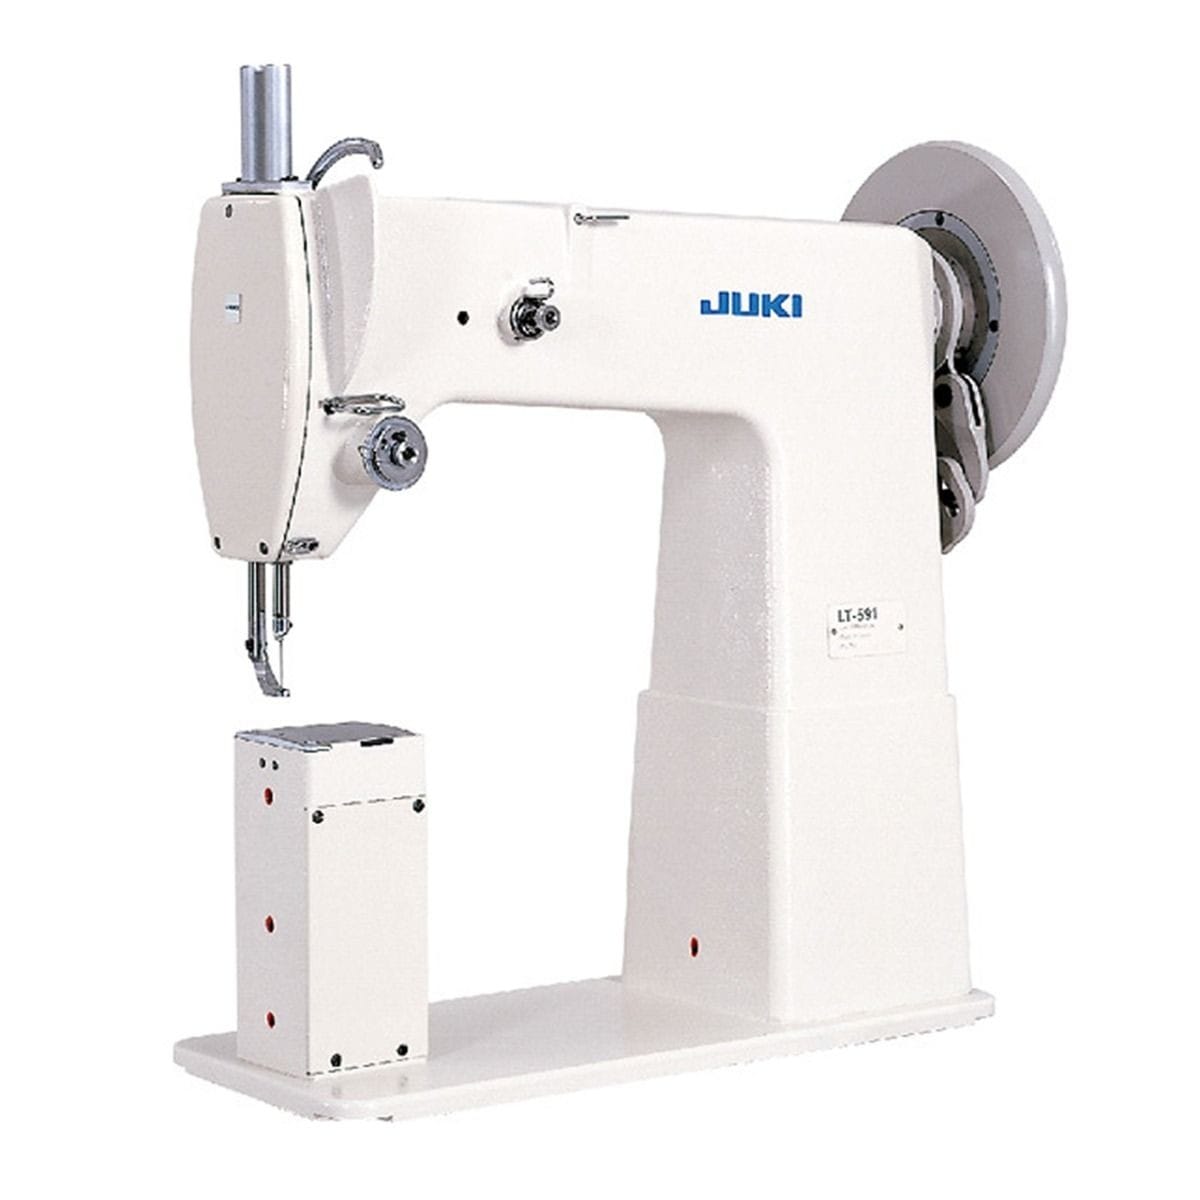 JUKI LT-591
1-Needle, Lockstitch, Post-Bed Type Basting Machine